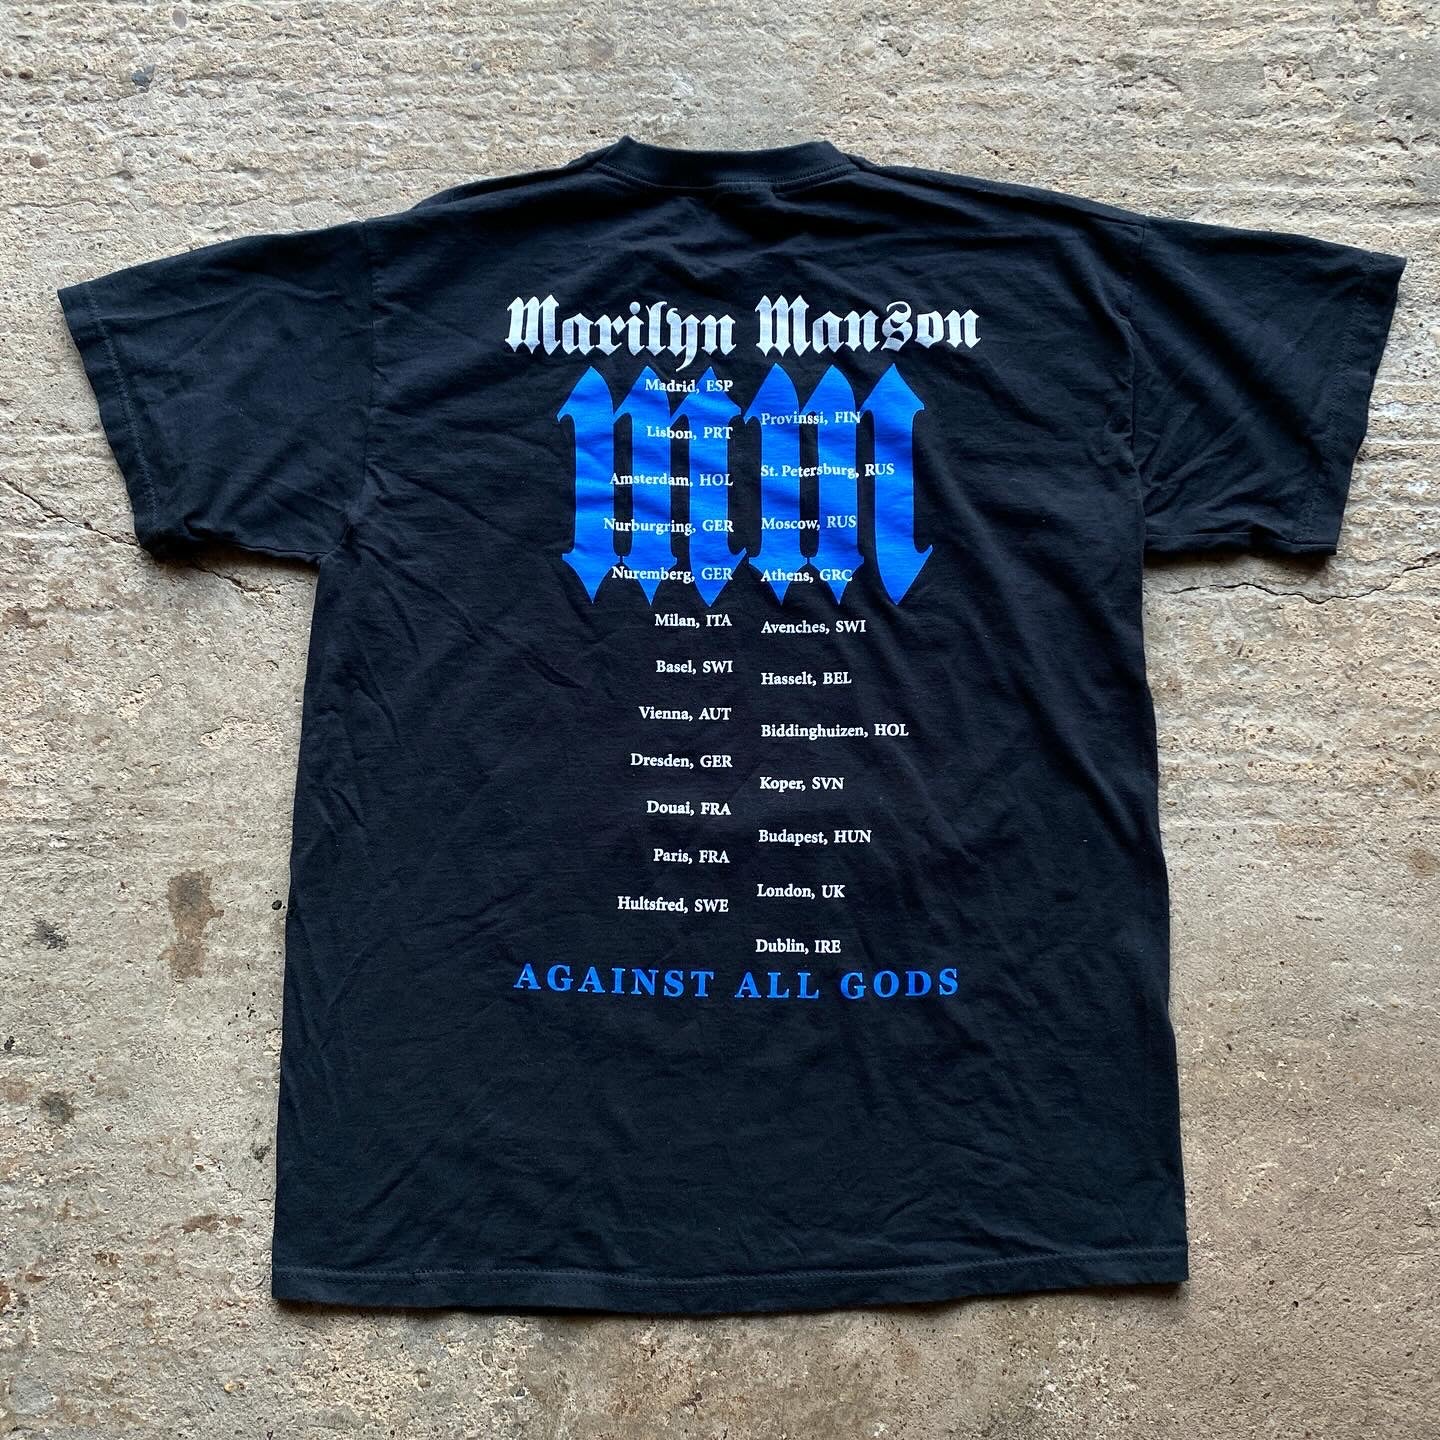 Marilyn Manson - 'Against All Gods' - 2004 - M/L